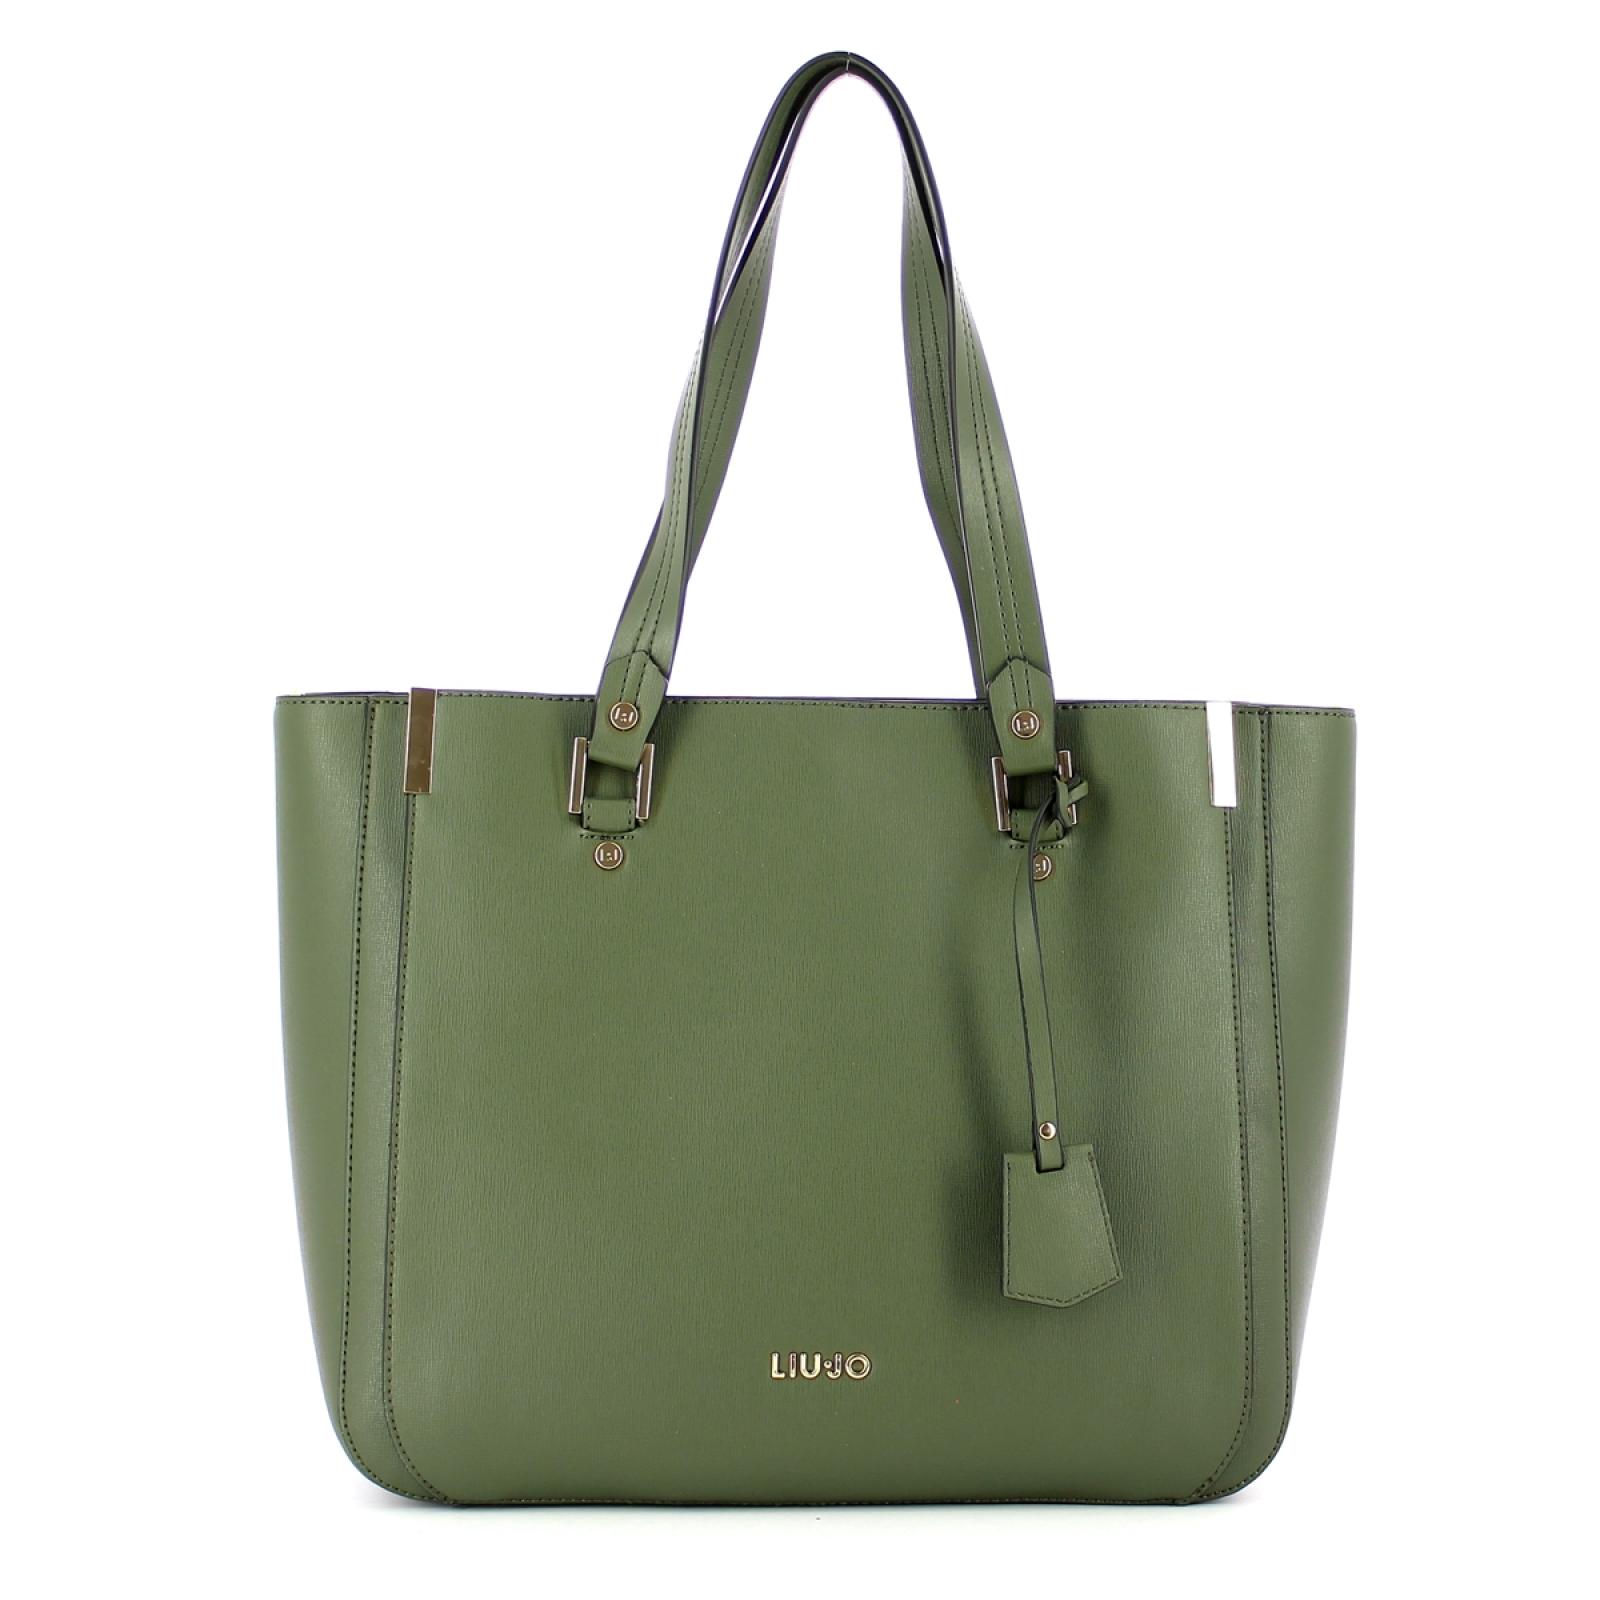 Liu Jo Shopping bag con charm - 1